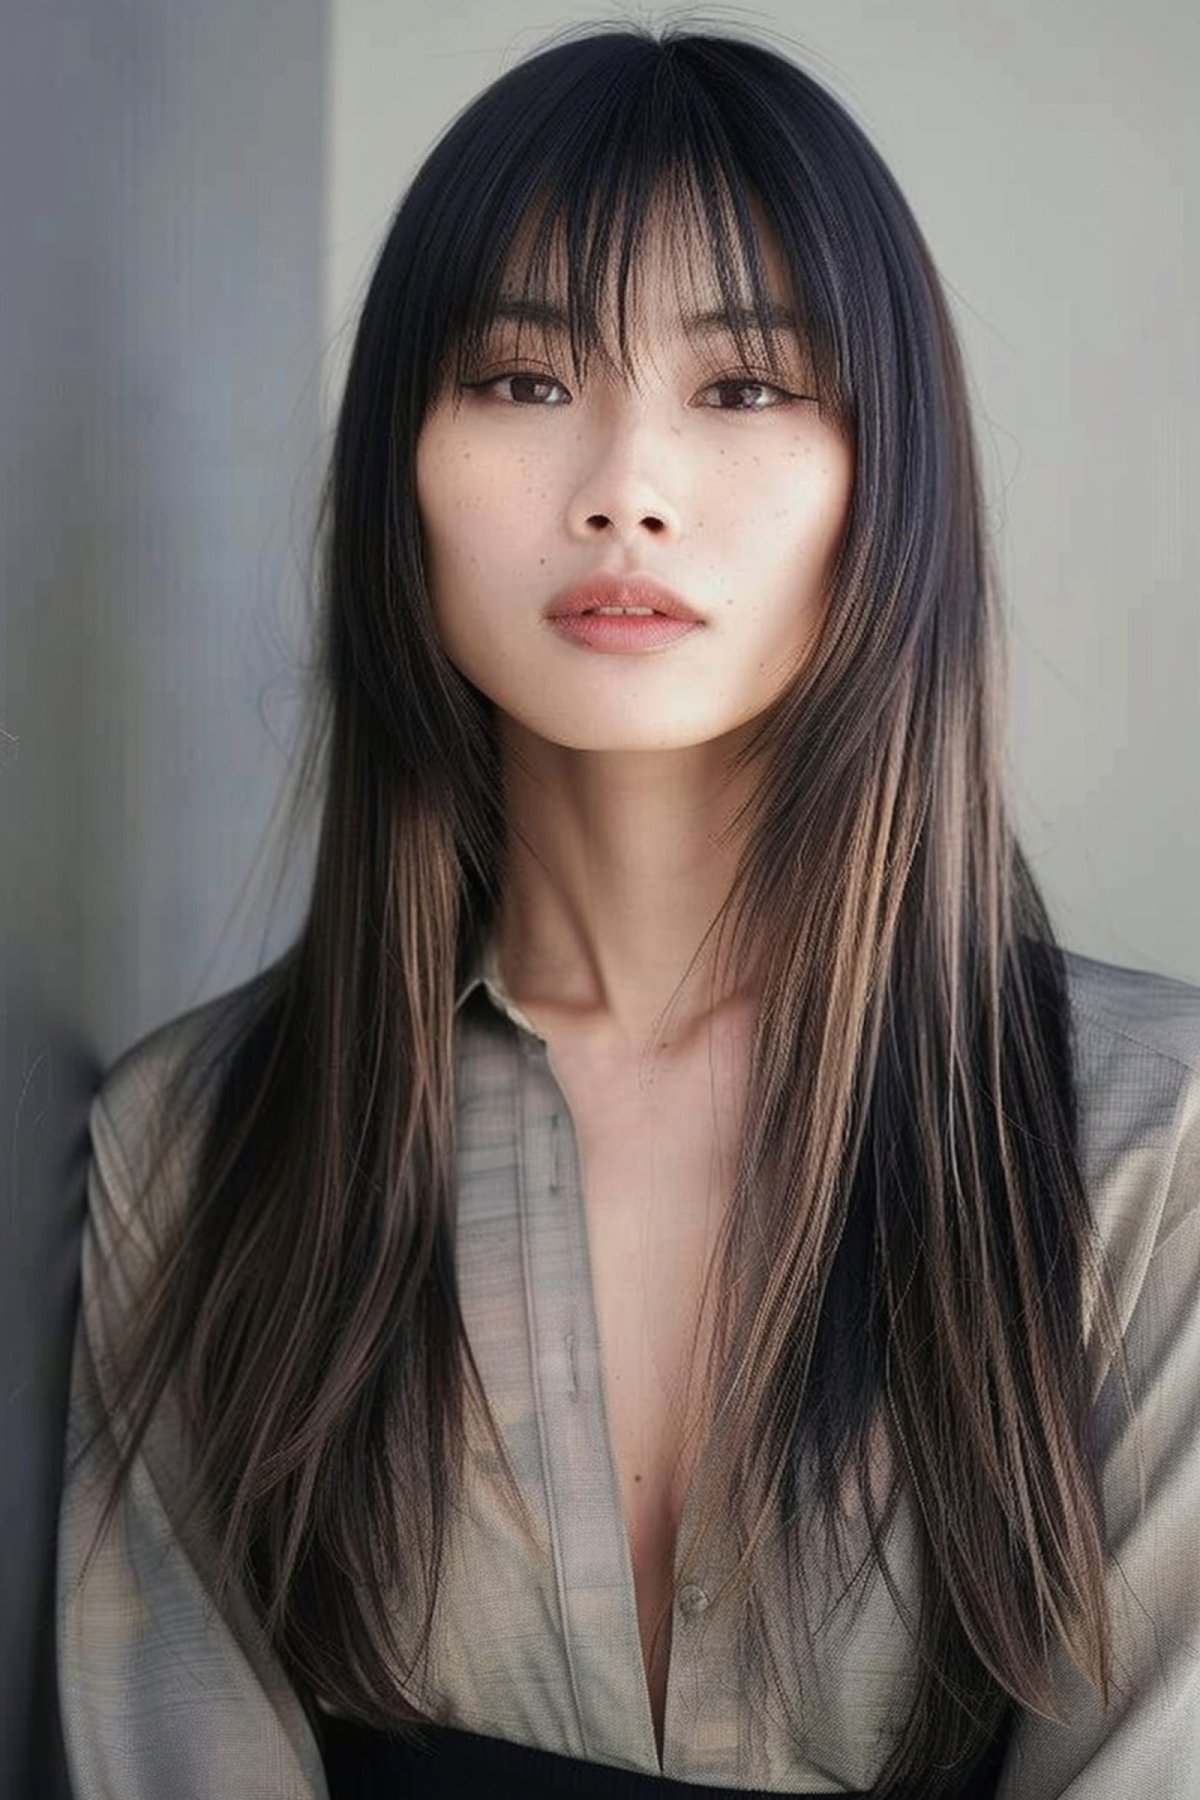 Asian woman with long sleek hair and soft wispy bangs